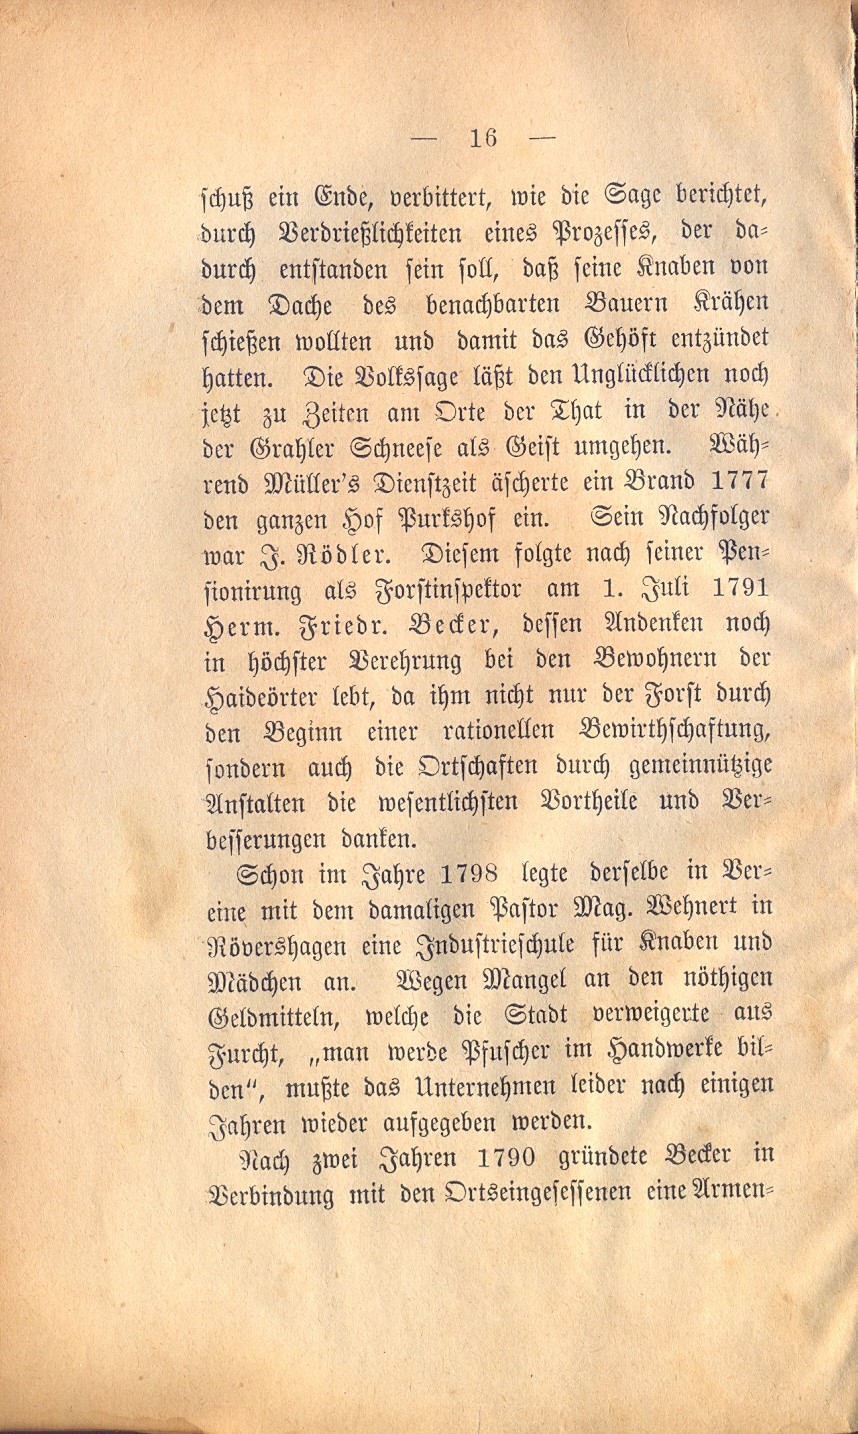 Dolberg KW 1885 016